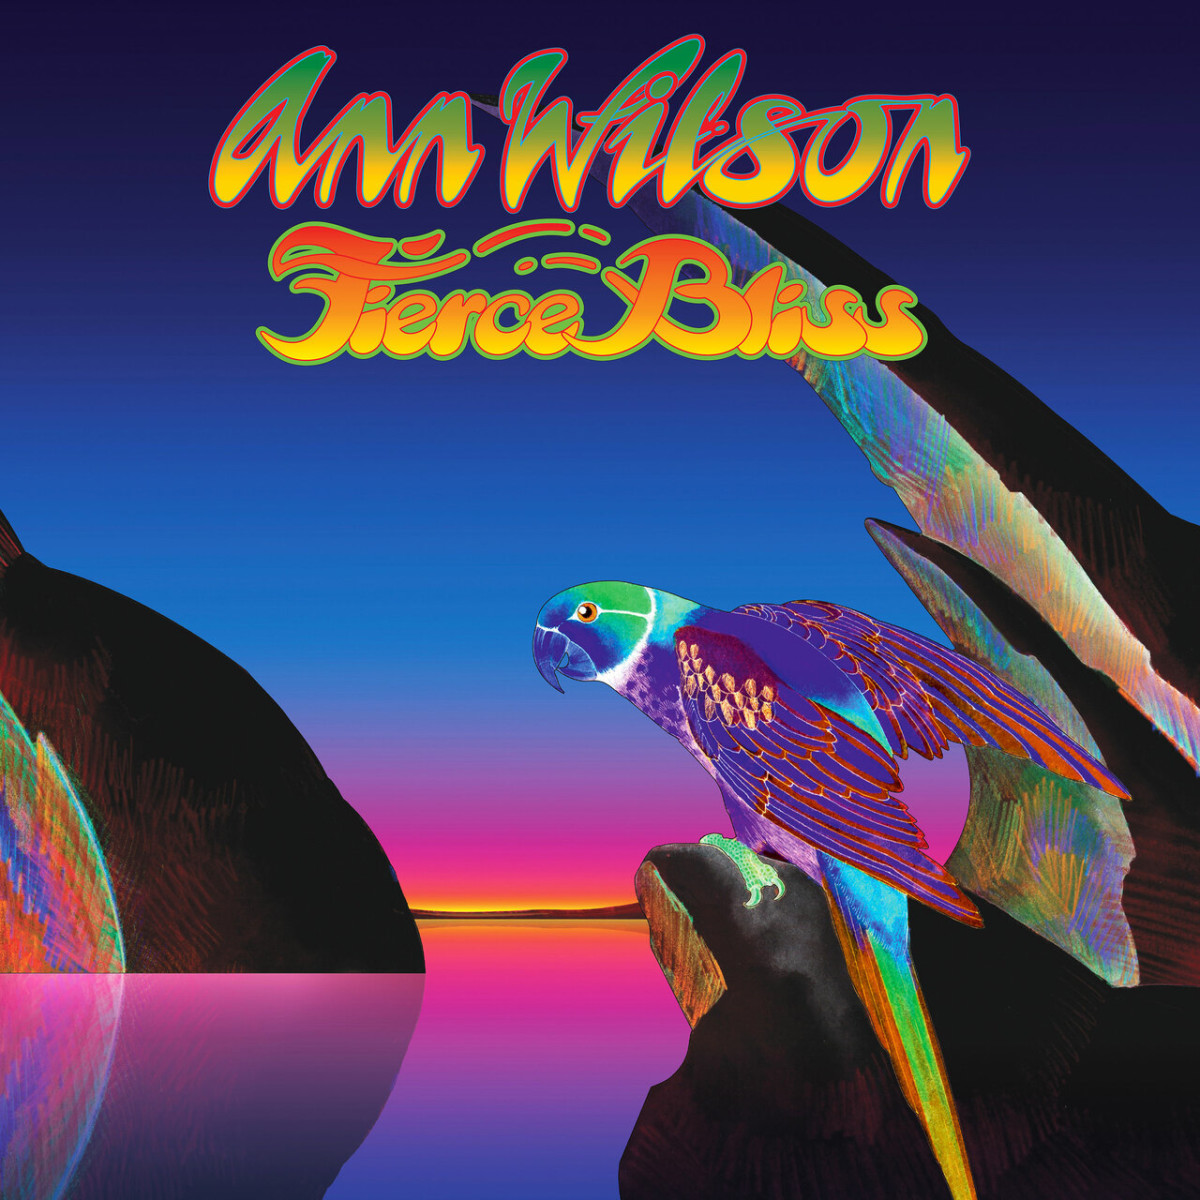 Ann Wilson's latest album, 'Fierce Bliss,'